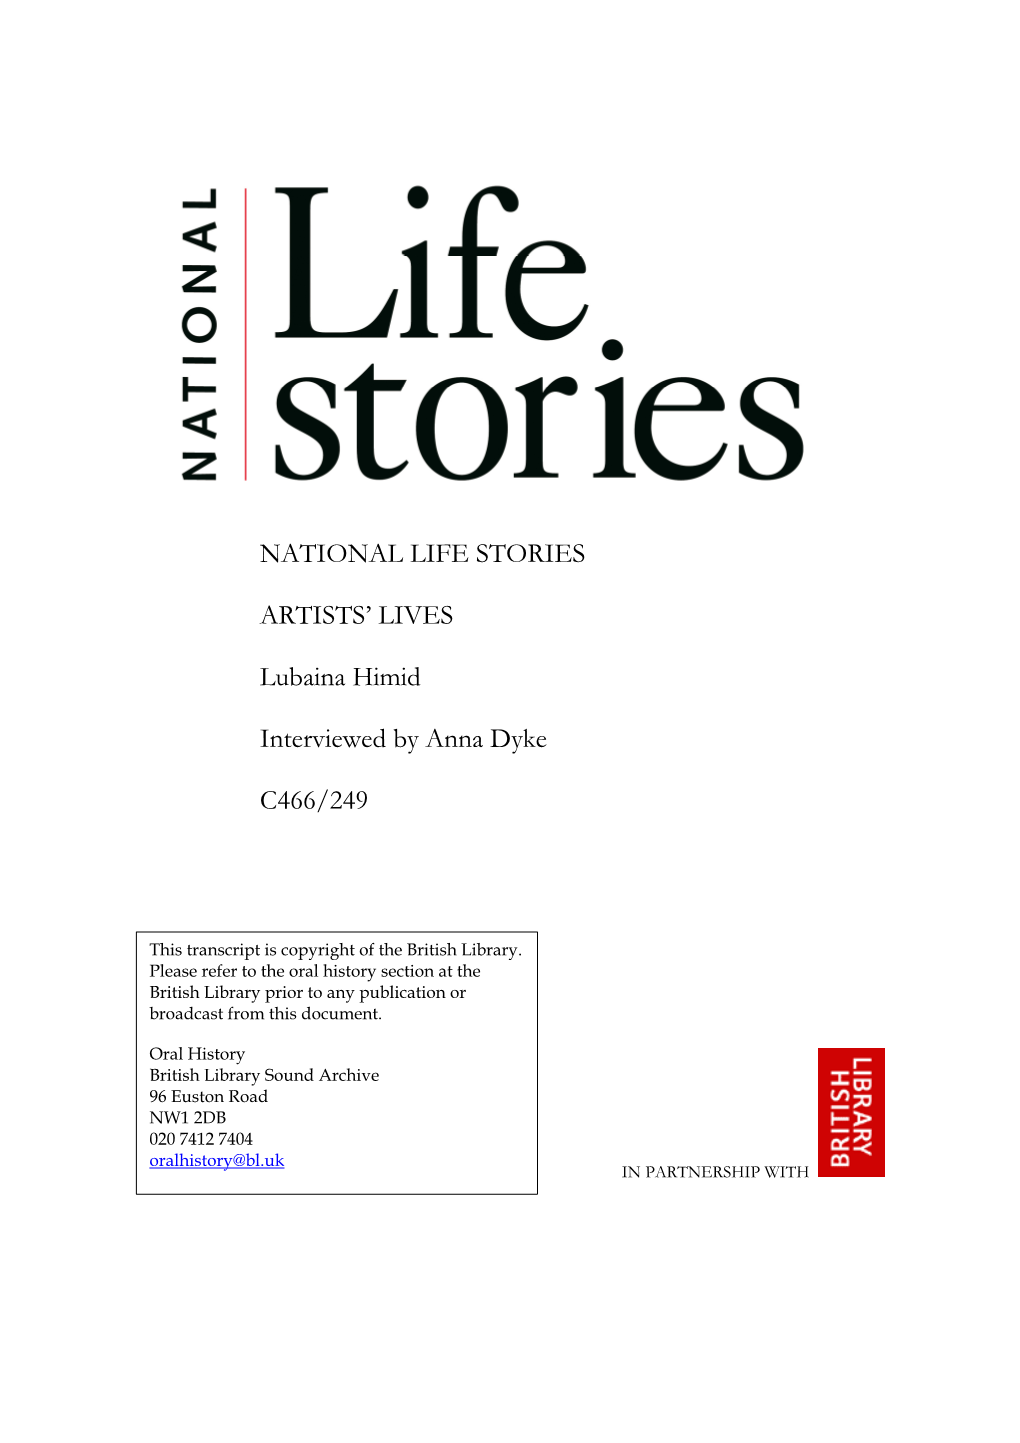 NATIONAL LIFE STORIES ARTISTS' LIVES Lubaina Himid